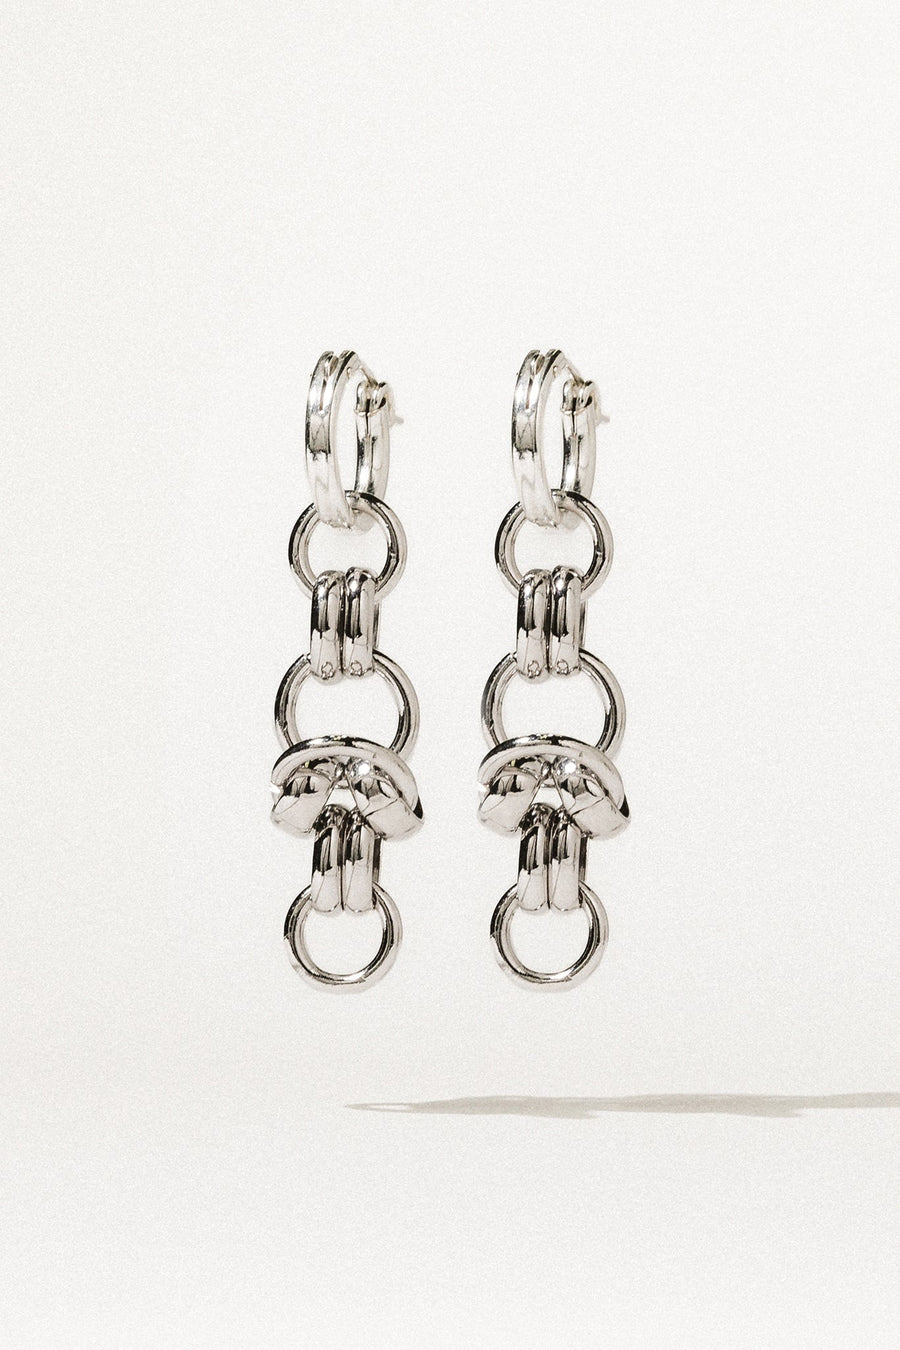 Goddess Jewelry Silver Pinto Chain Earrings